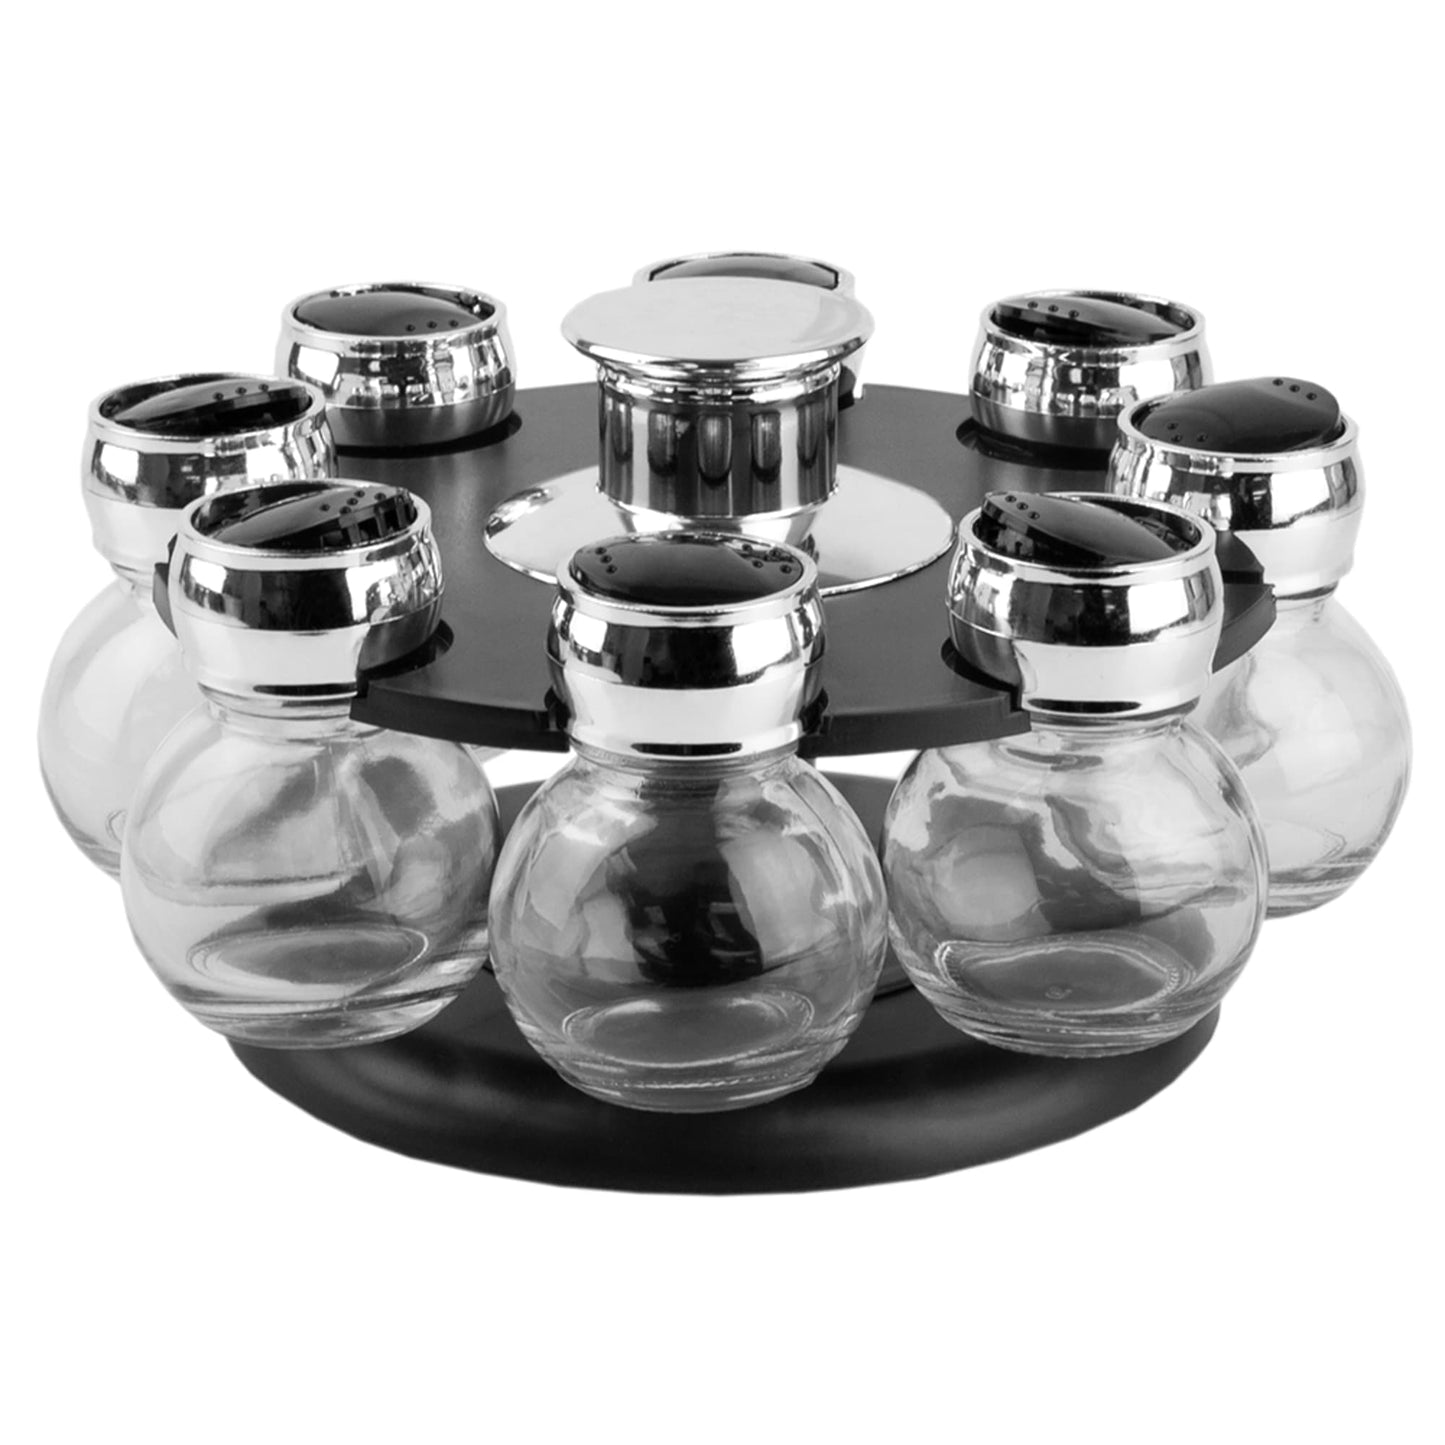 Contemporary Low Profile Revolving 8-Jar Spice Rack Set, Black